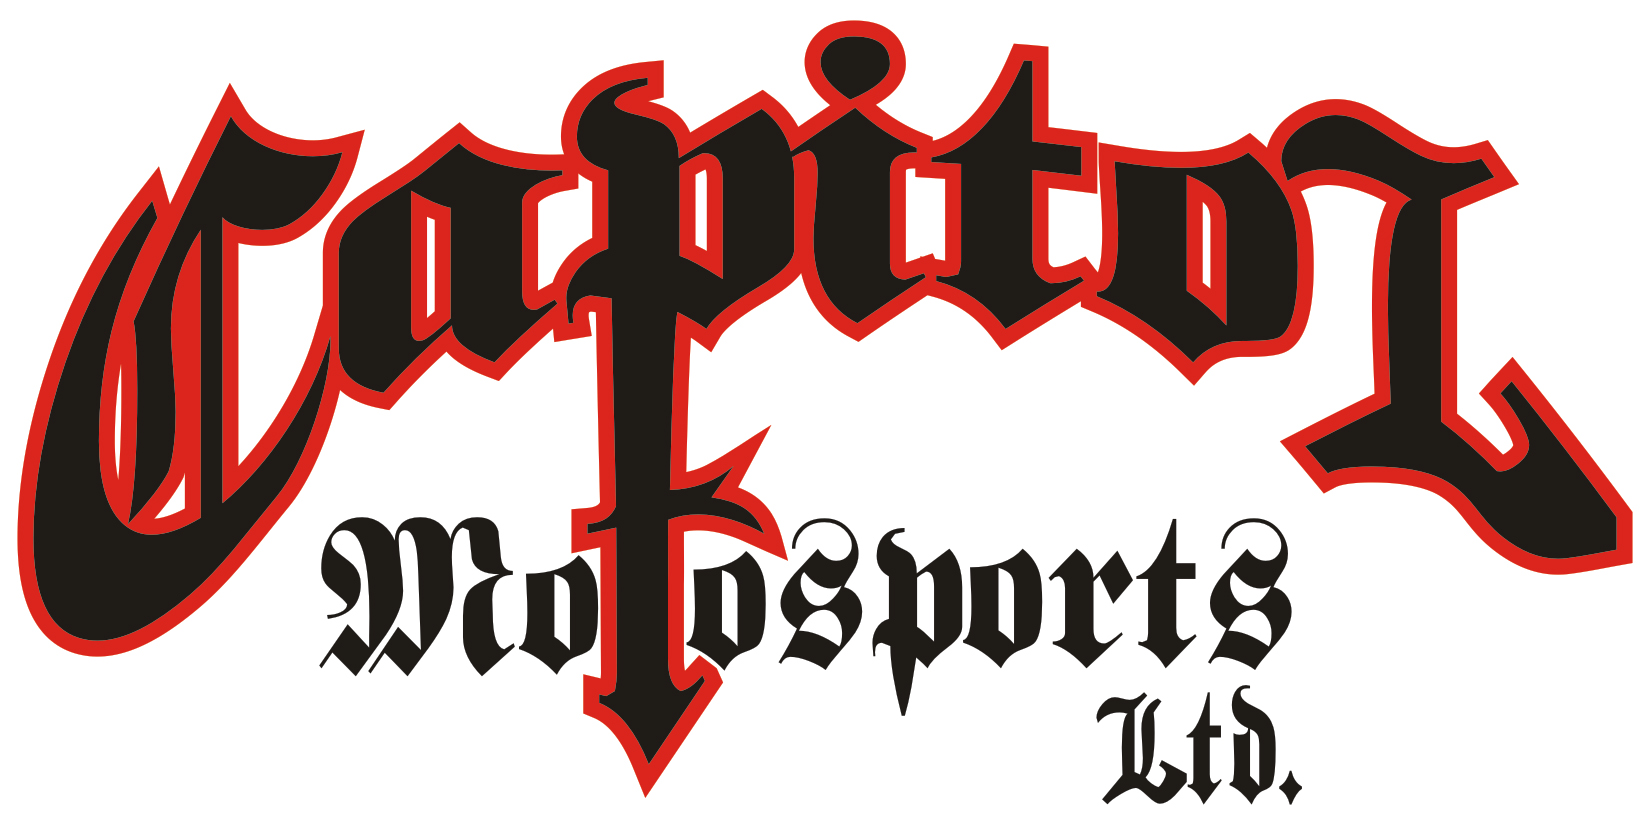 Capitol_logo.jpg